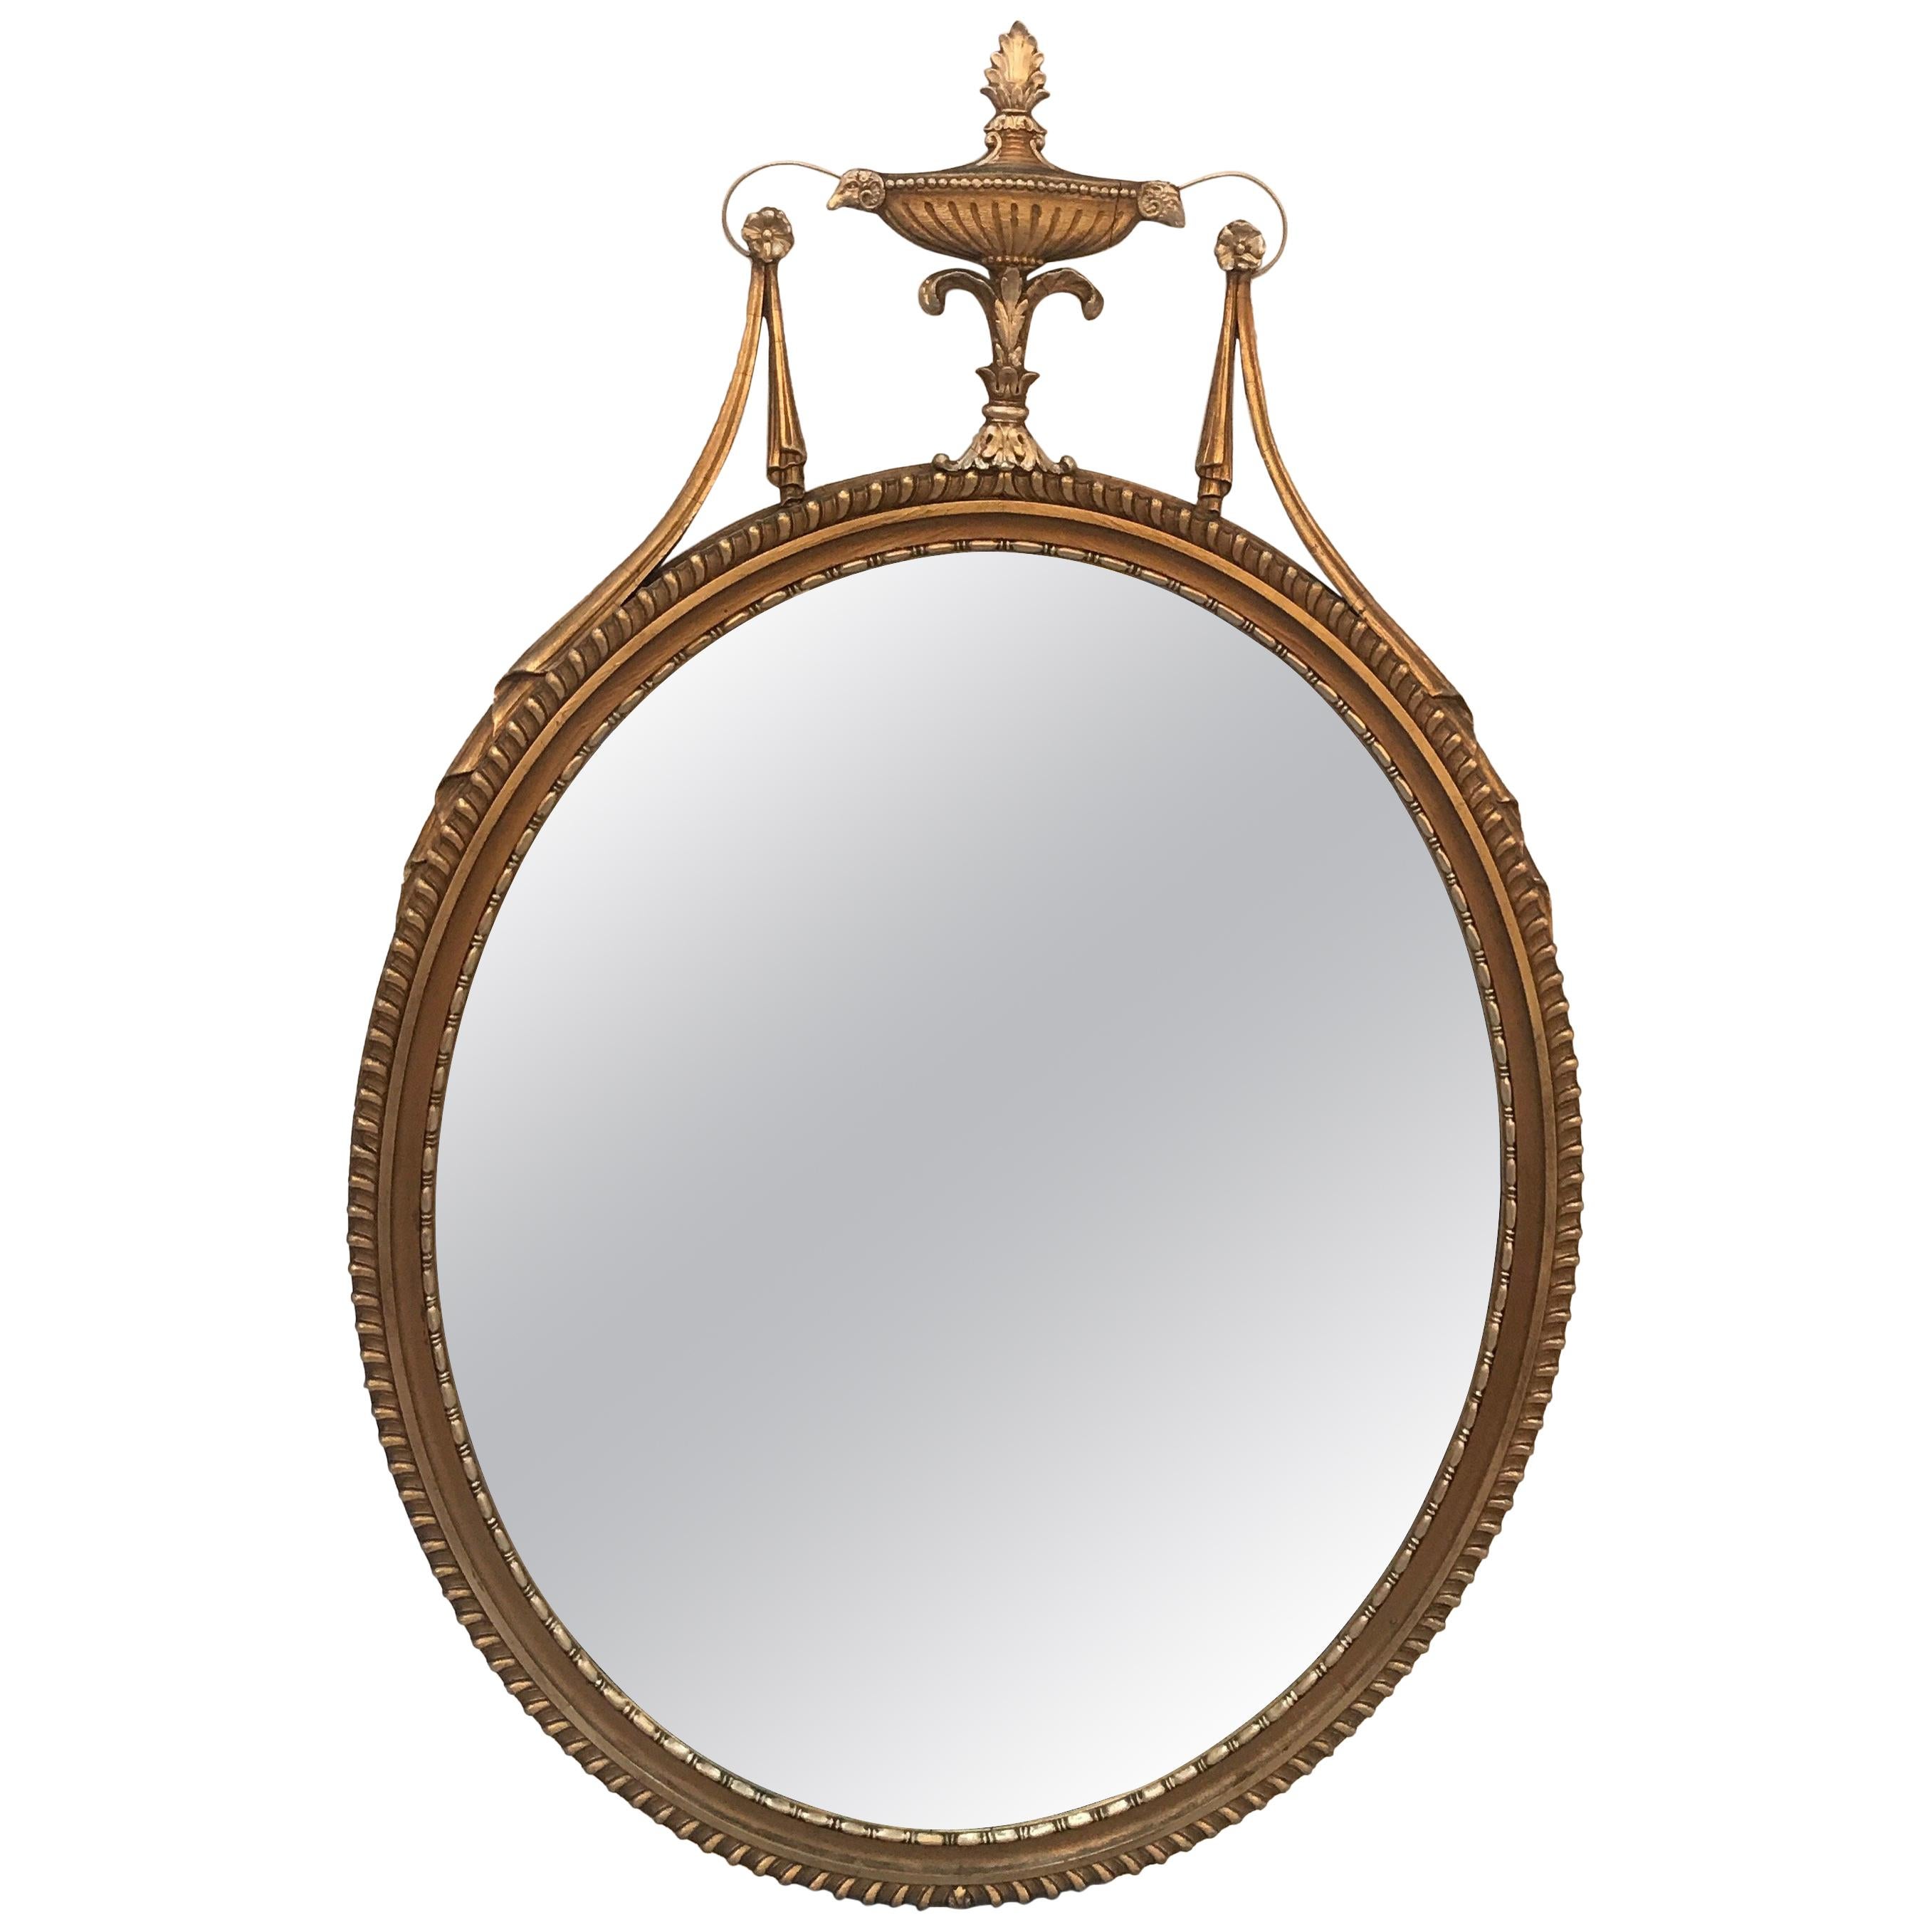 Giltwood English Adam Style Oval Wall Mirror